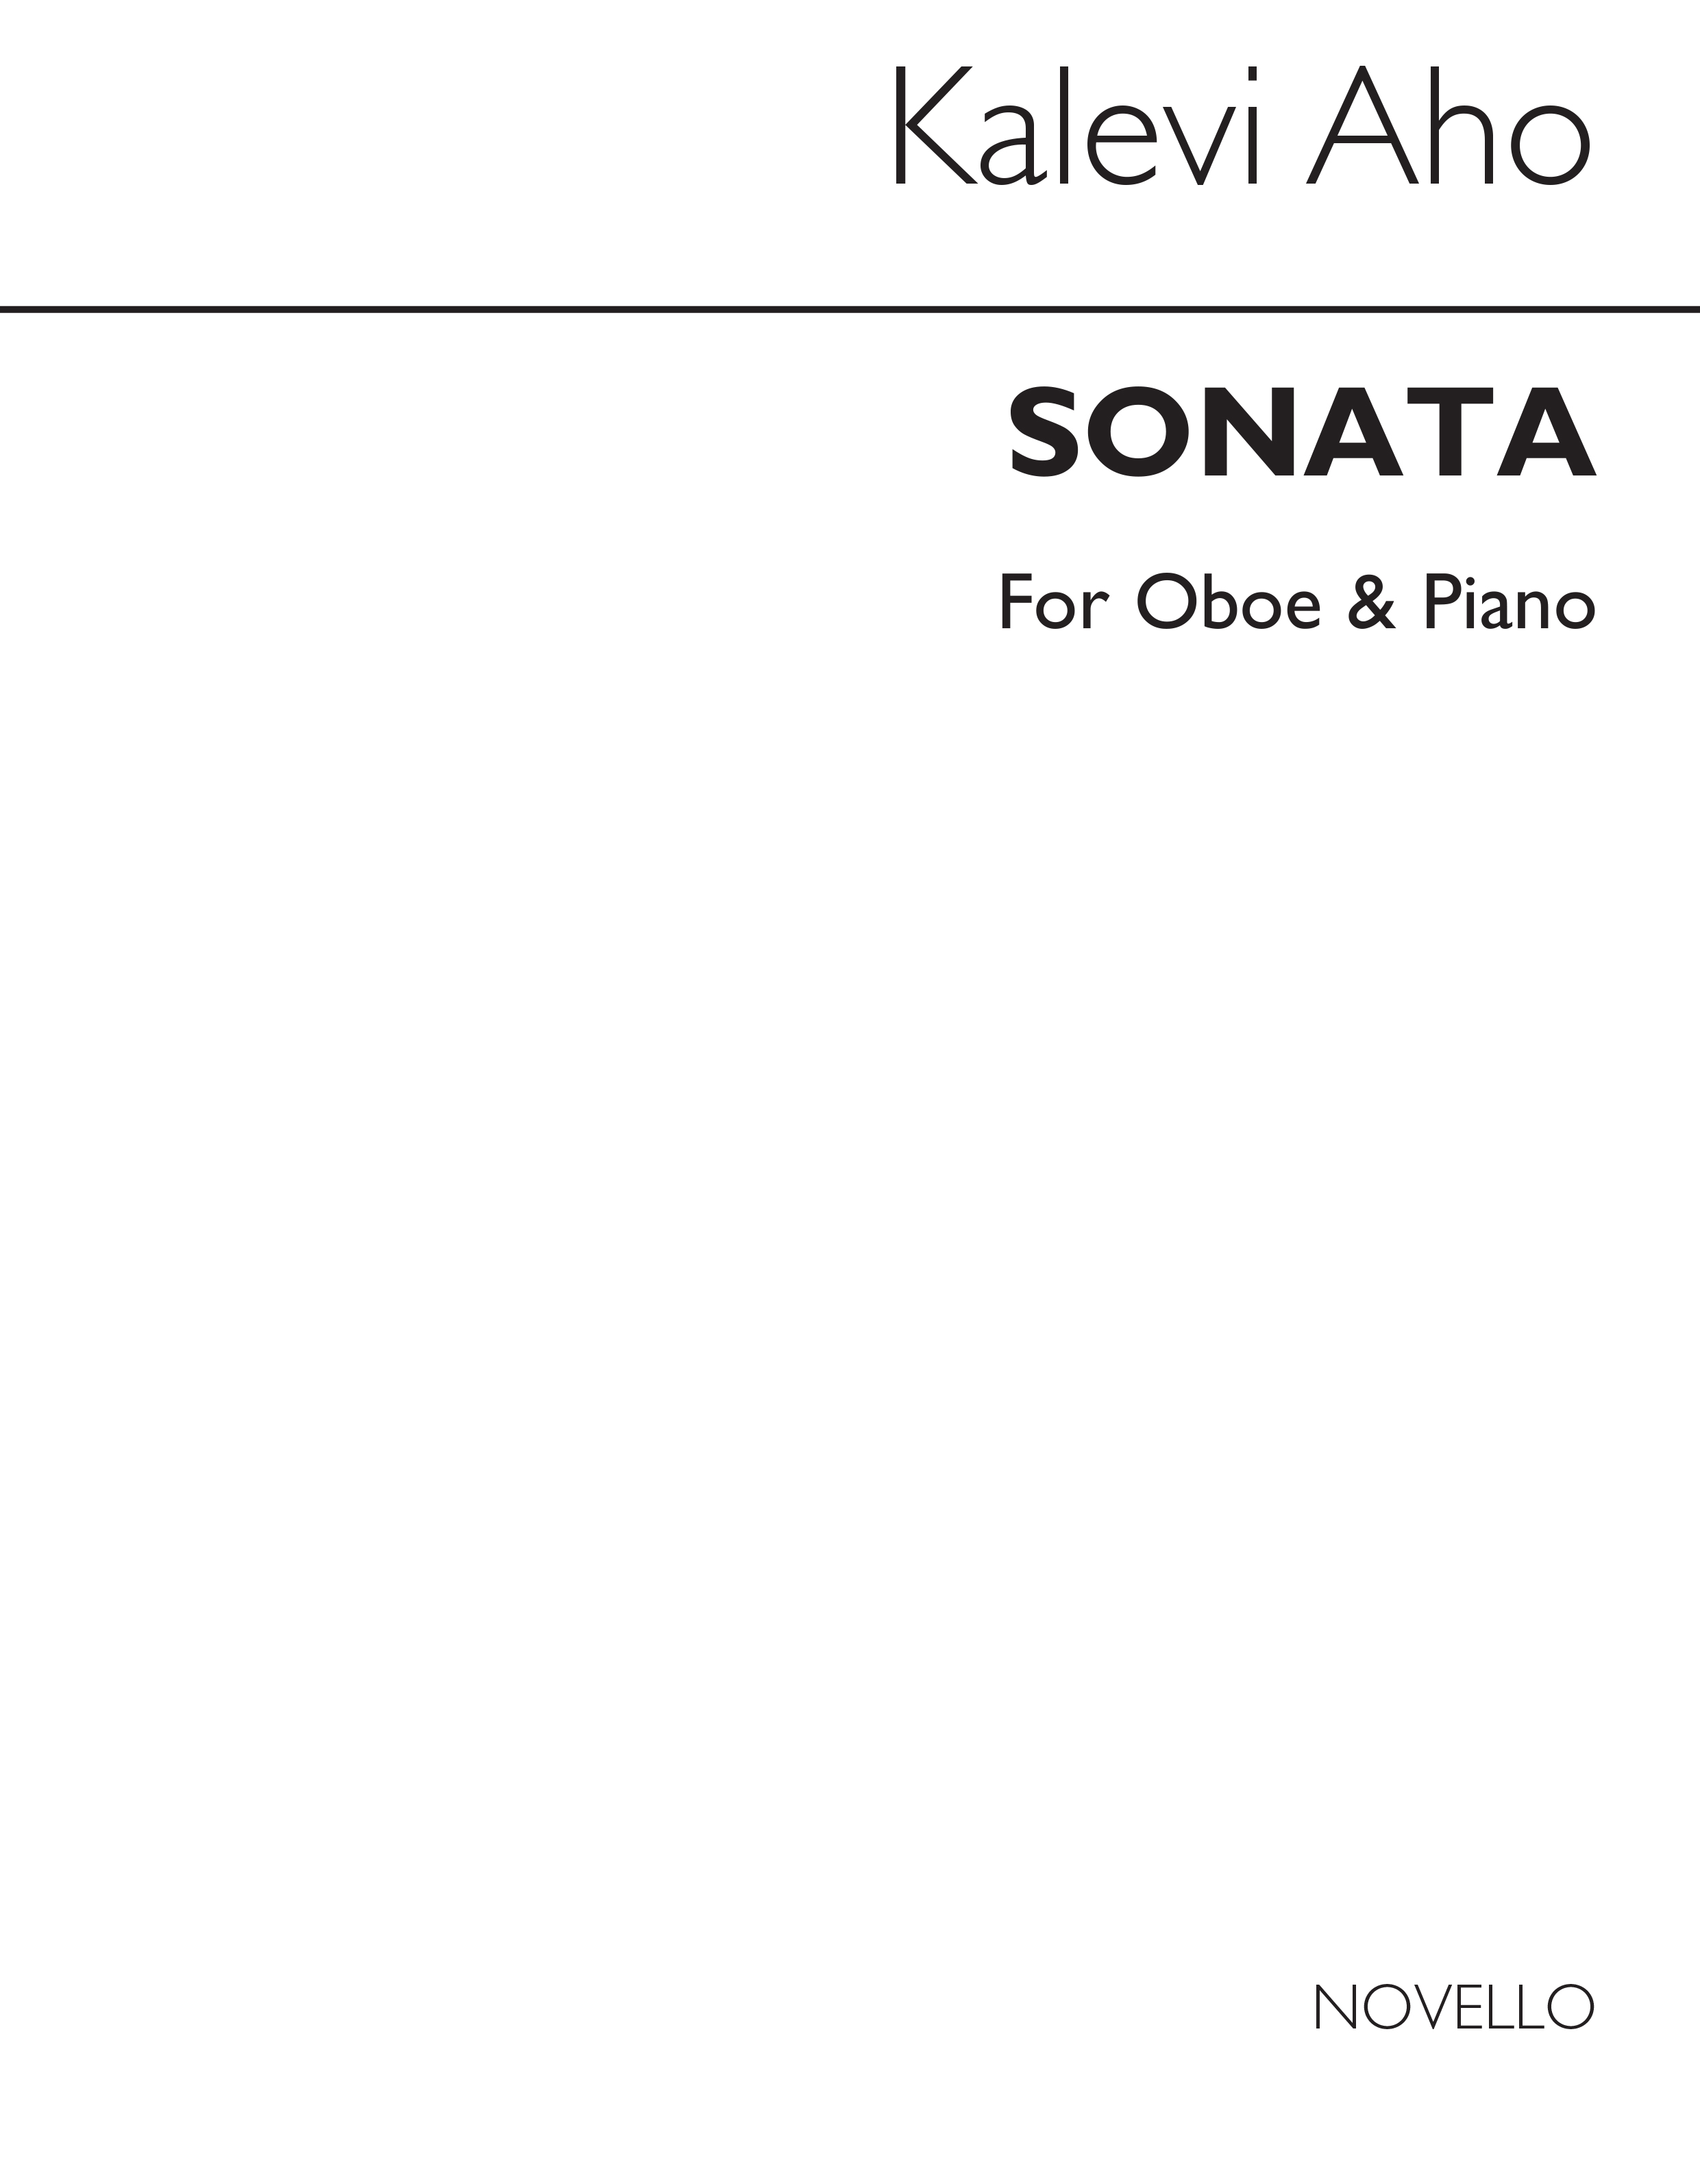 Aho: Oboe Sonata